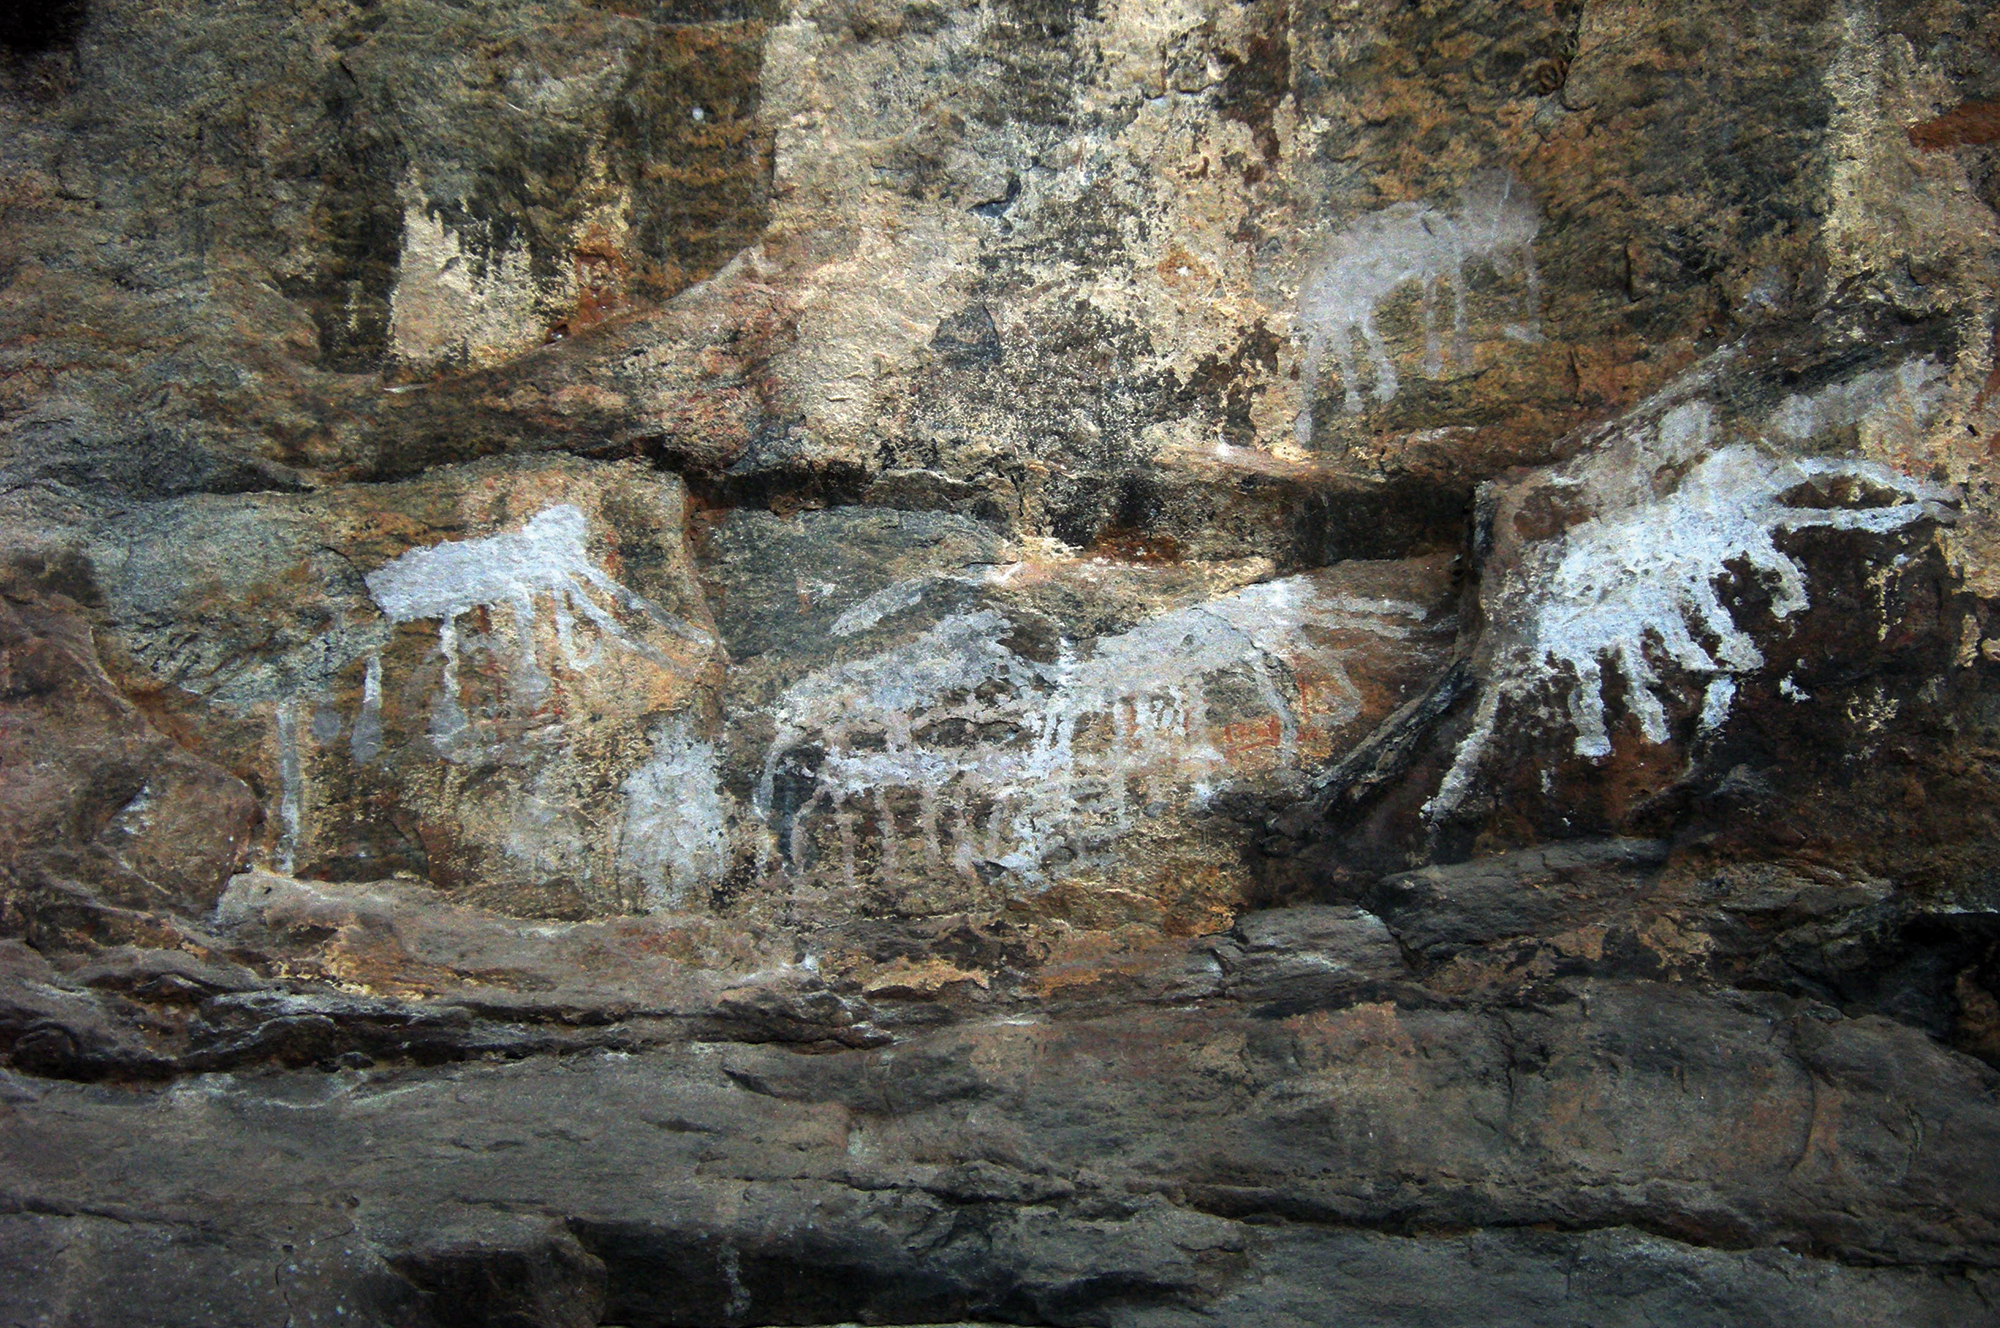 Bradshaw Foundation Wettambugala Rock Shelter Rock Art Paintings Engraving Sites Sri Lanka